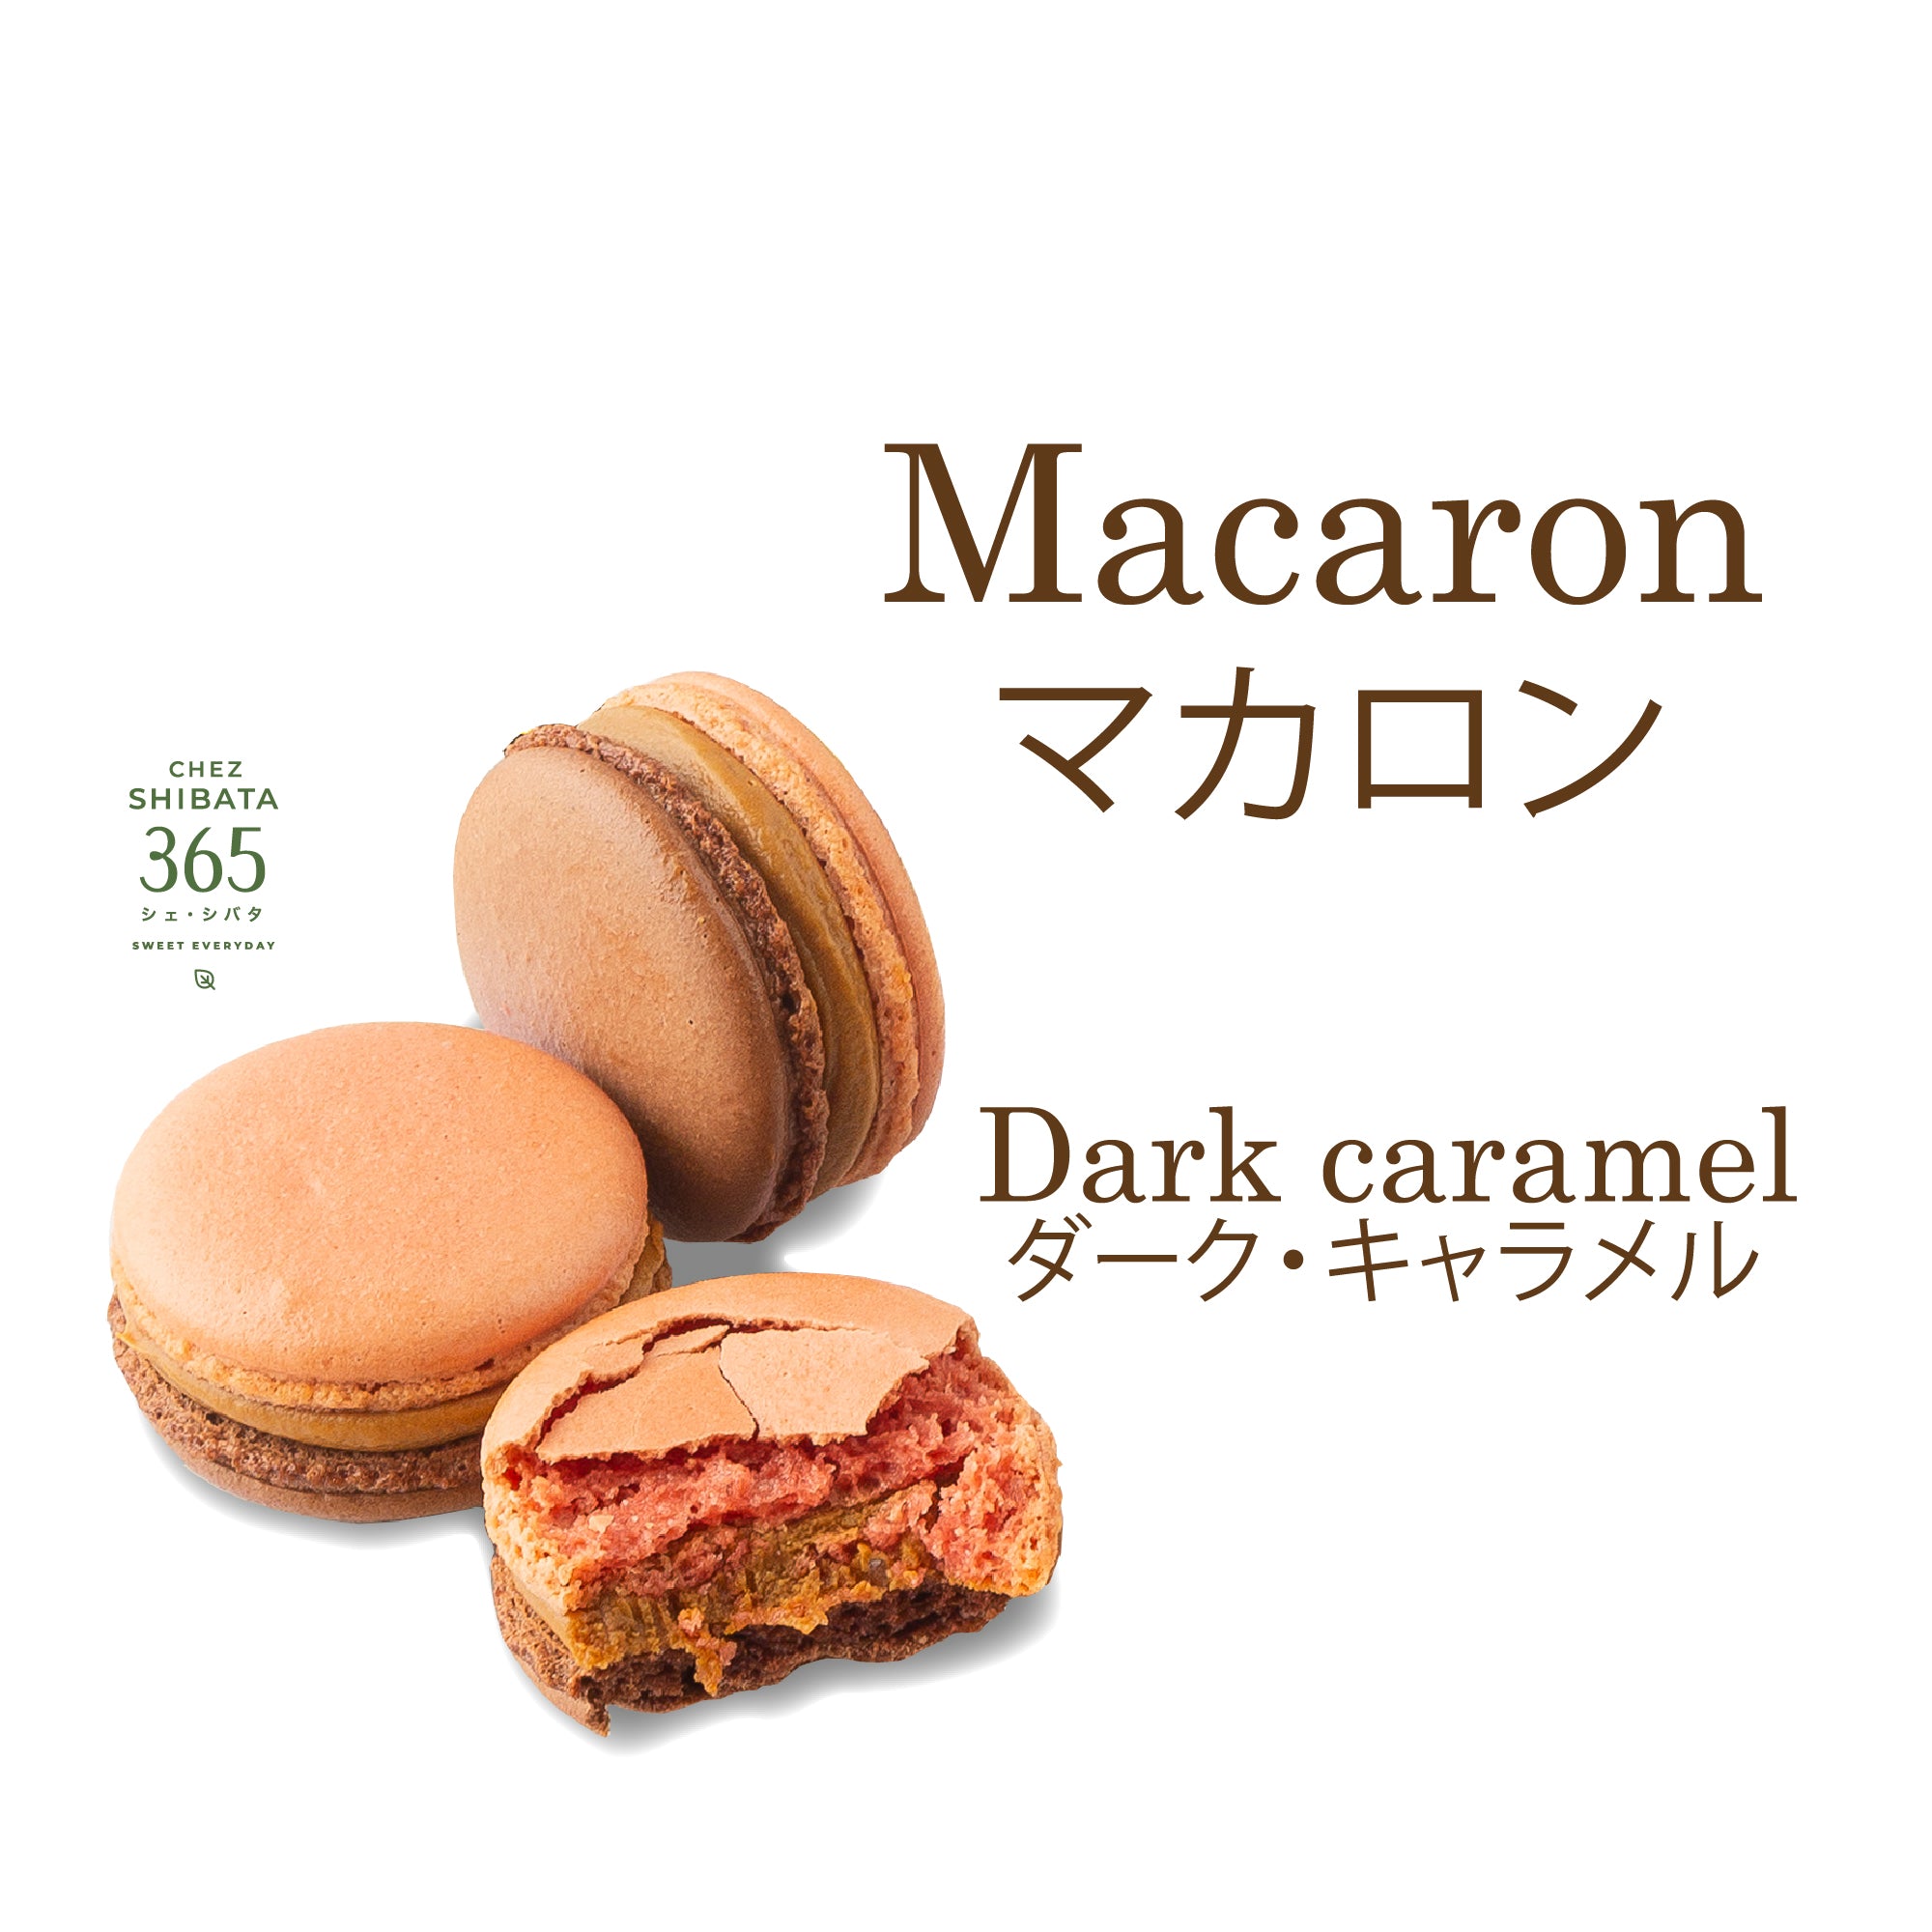 Les macarons มาการองคาราเมล - Chez Shibata 365 – Chez Shibata 365